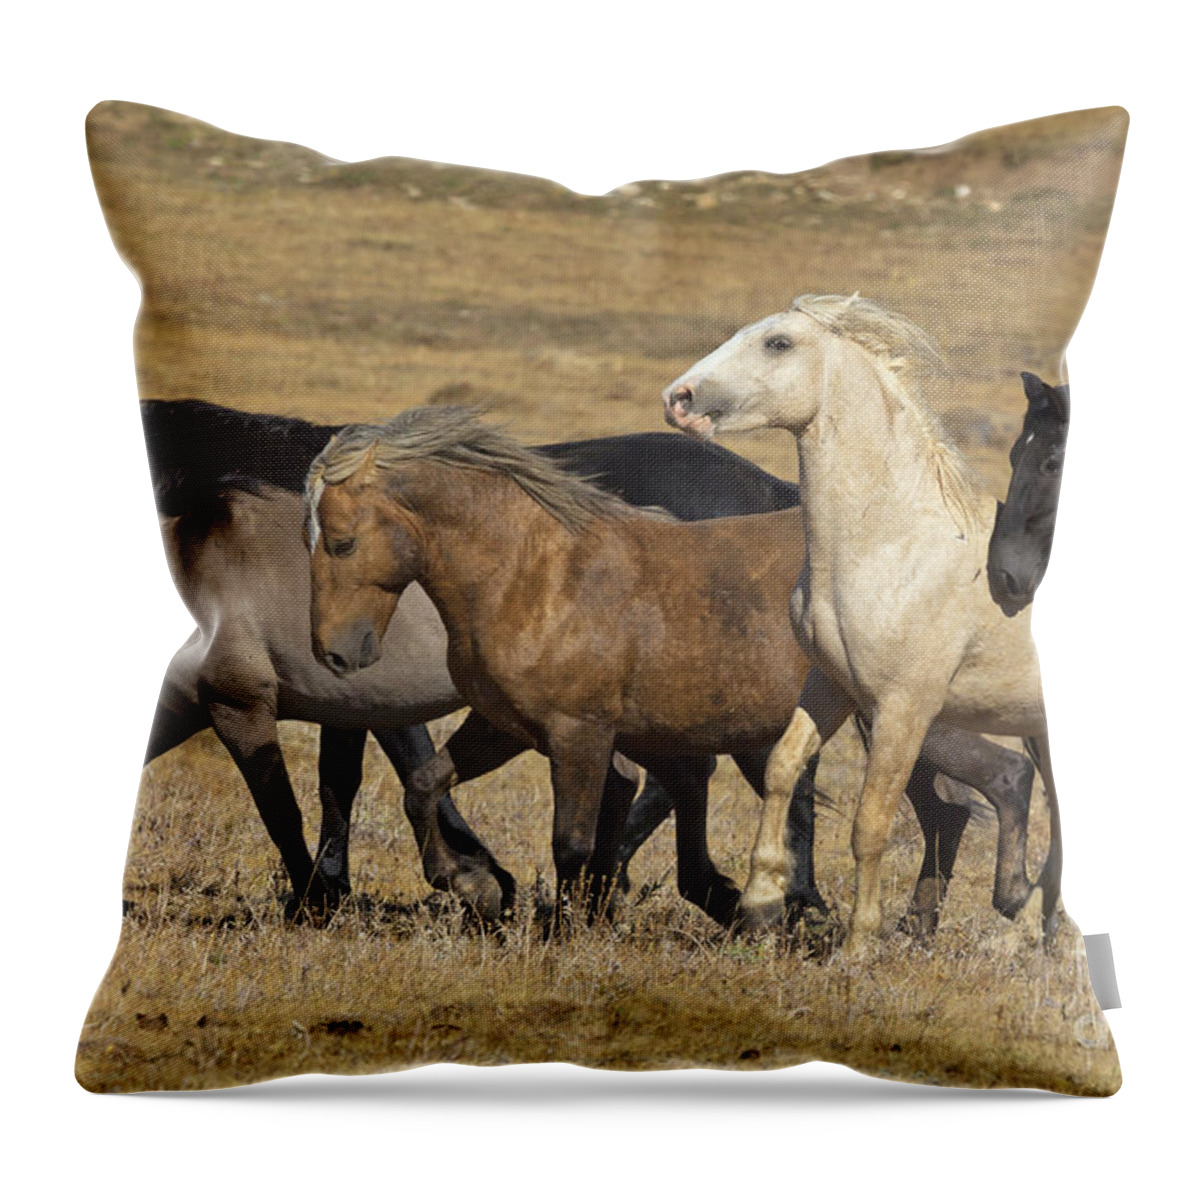 00537206 Throw Pillow featuring the photograph Wild Stallion Herd Pryor Mountain by Yva Momatiuk and John Eastcott